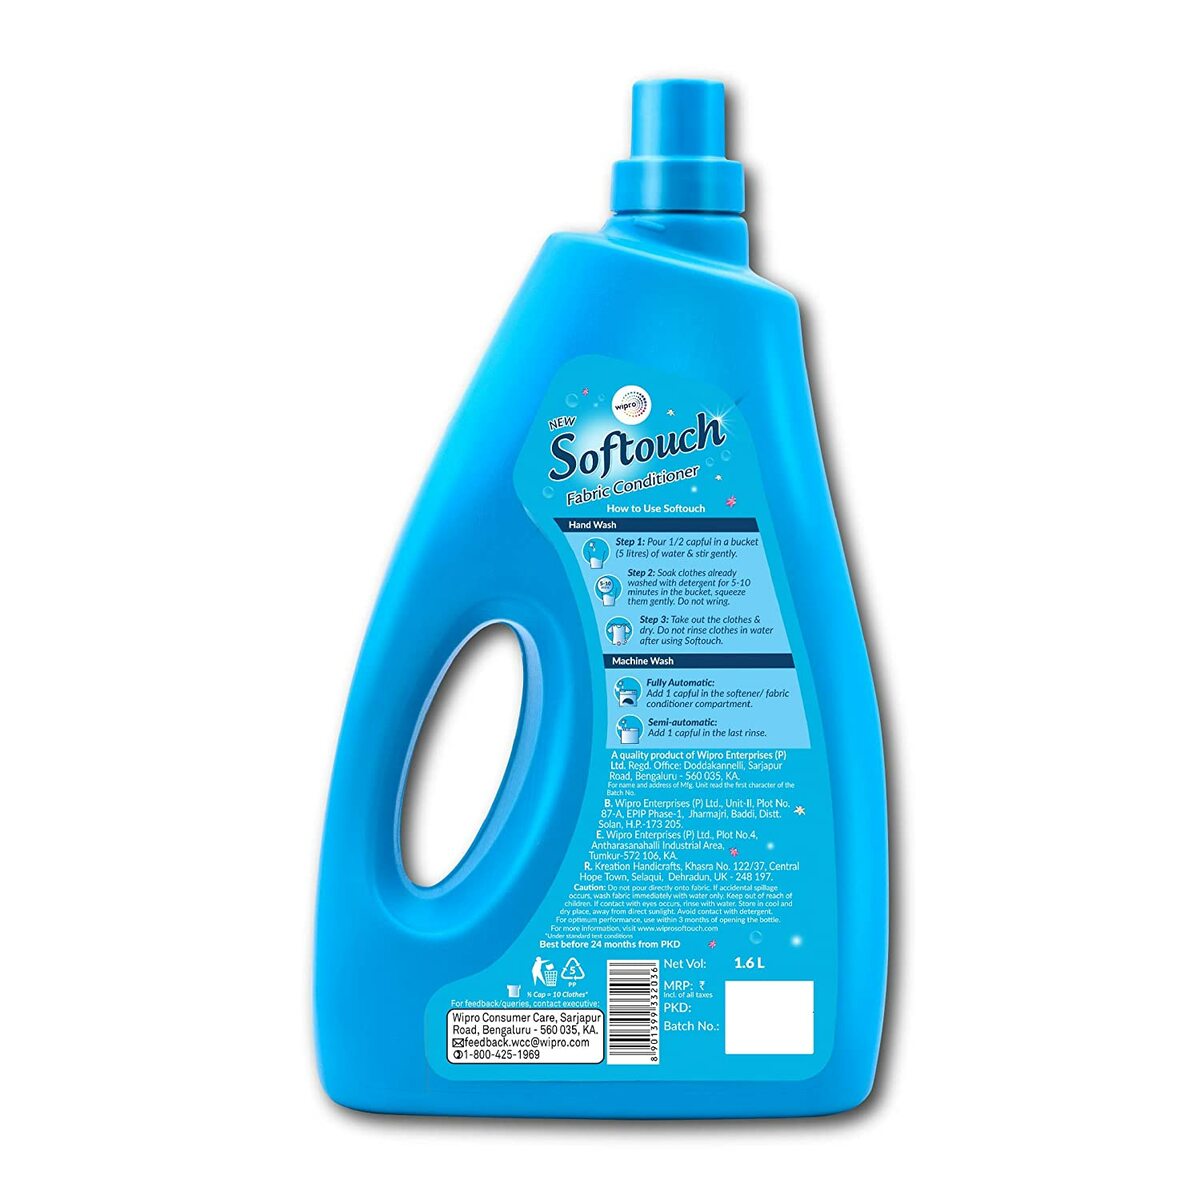 SafeWash Softouch Blue 1.6 Ltr